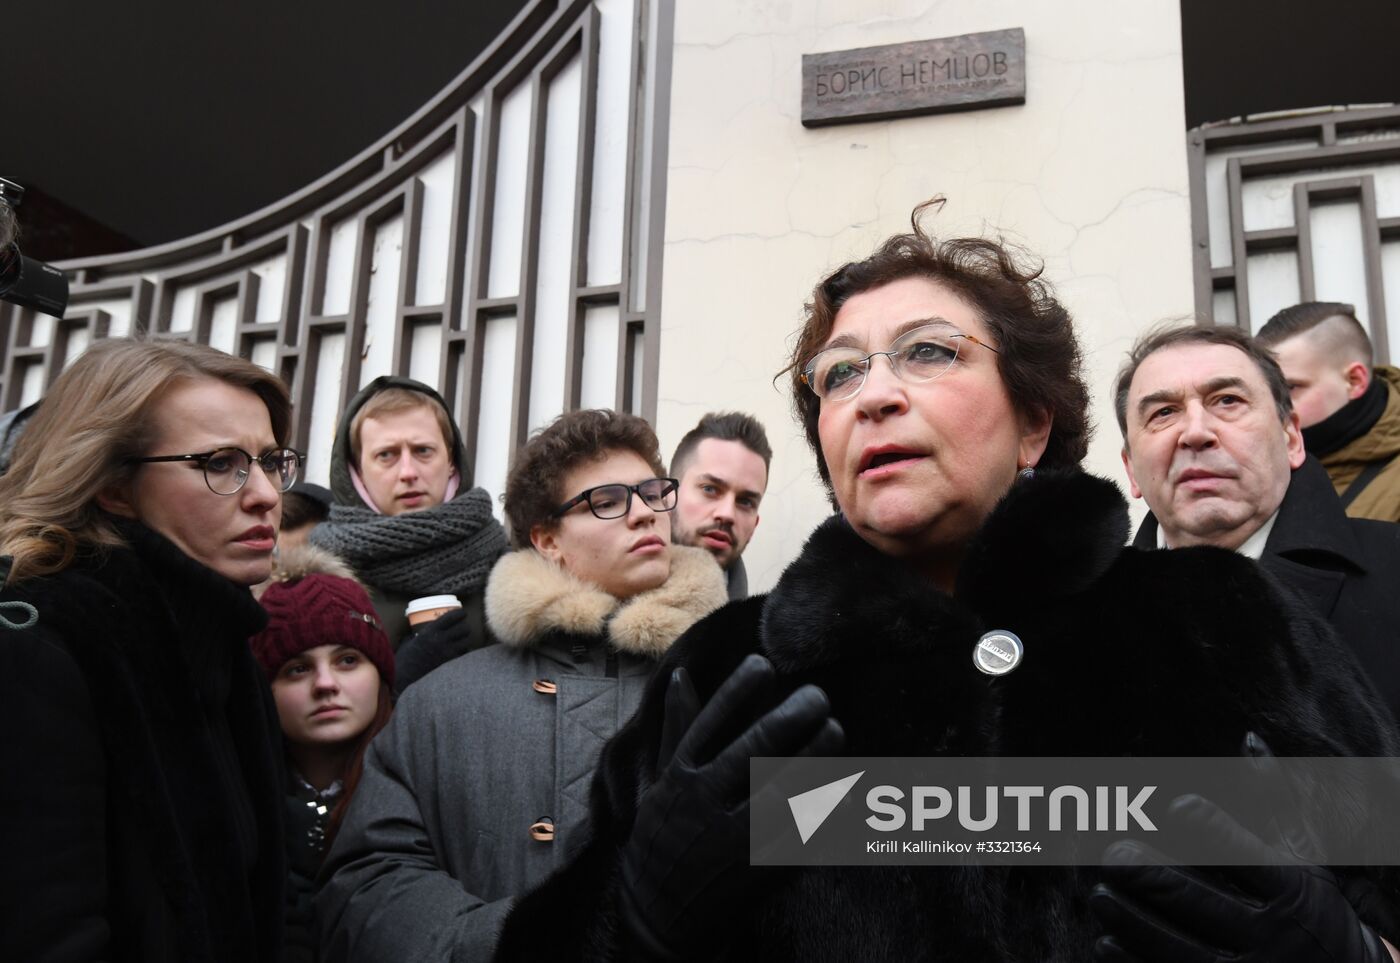 Boris Nemtsov memorial plaque unveiled